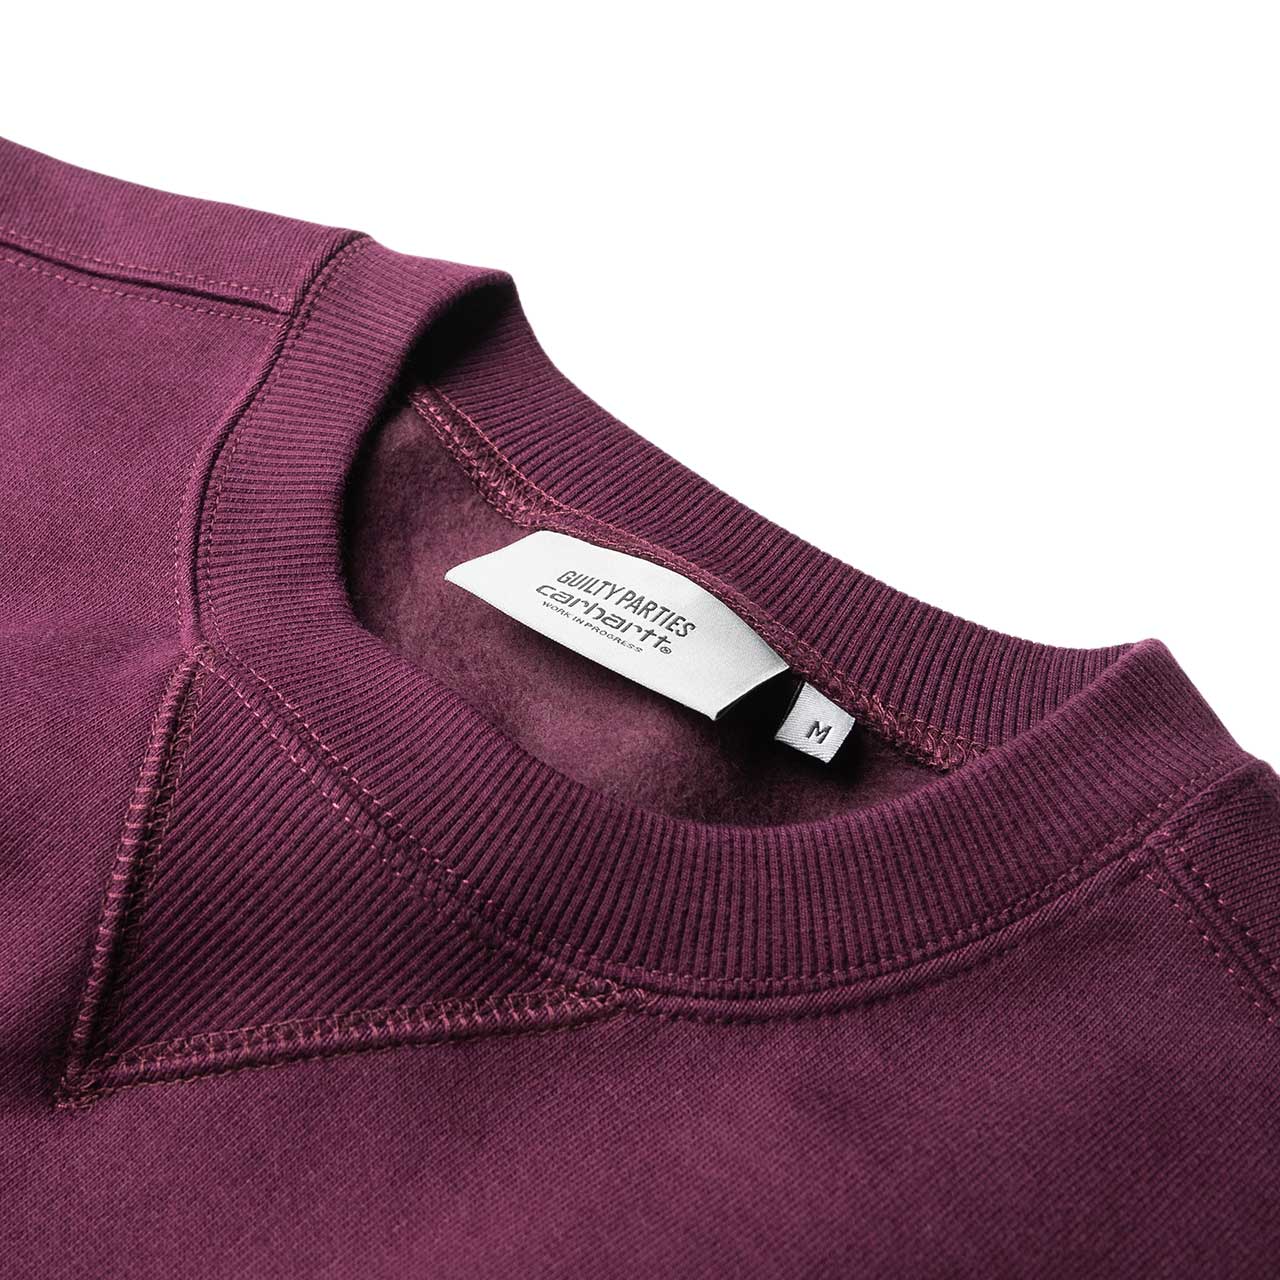 carhartt wip x wacko maria american script sweatshirt (purple) - i028250.0d8.00.03 - a.plus - Image - 4